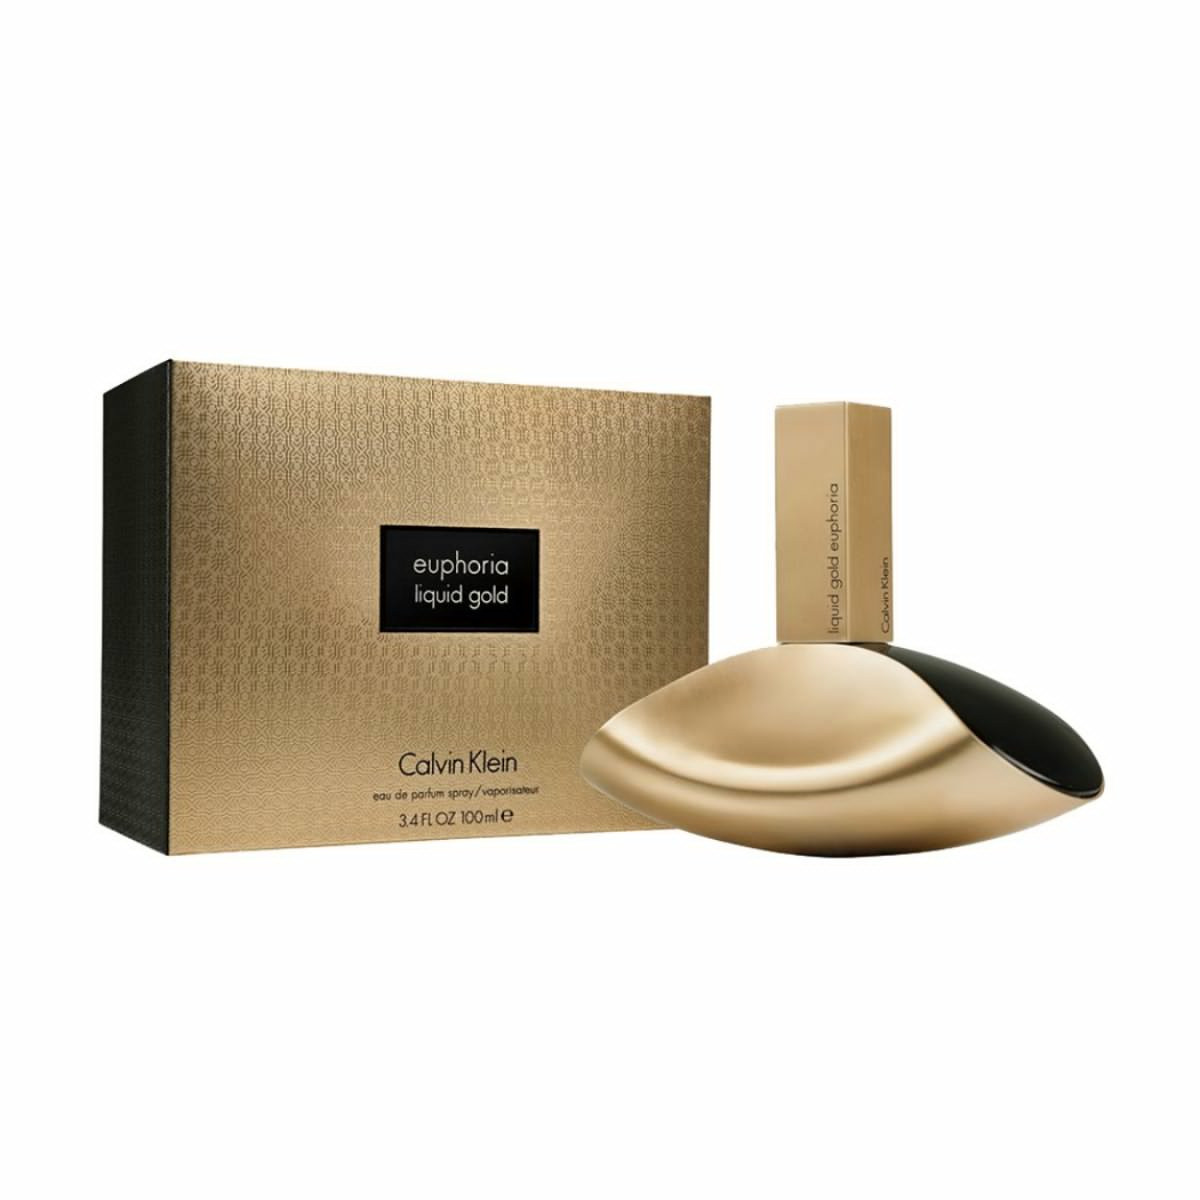 Calvin Klein "Liquid Gold Euphoria" 100 ml